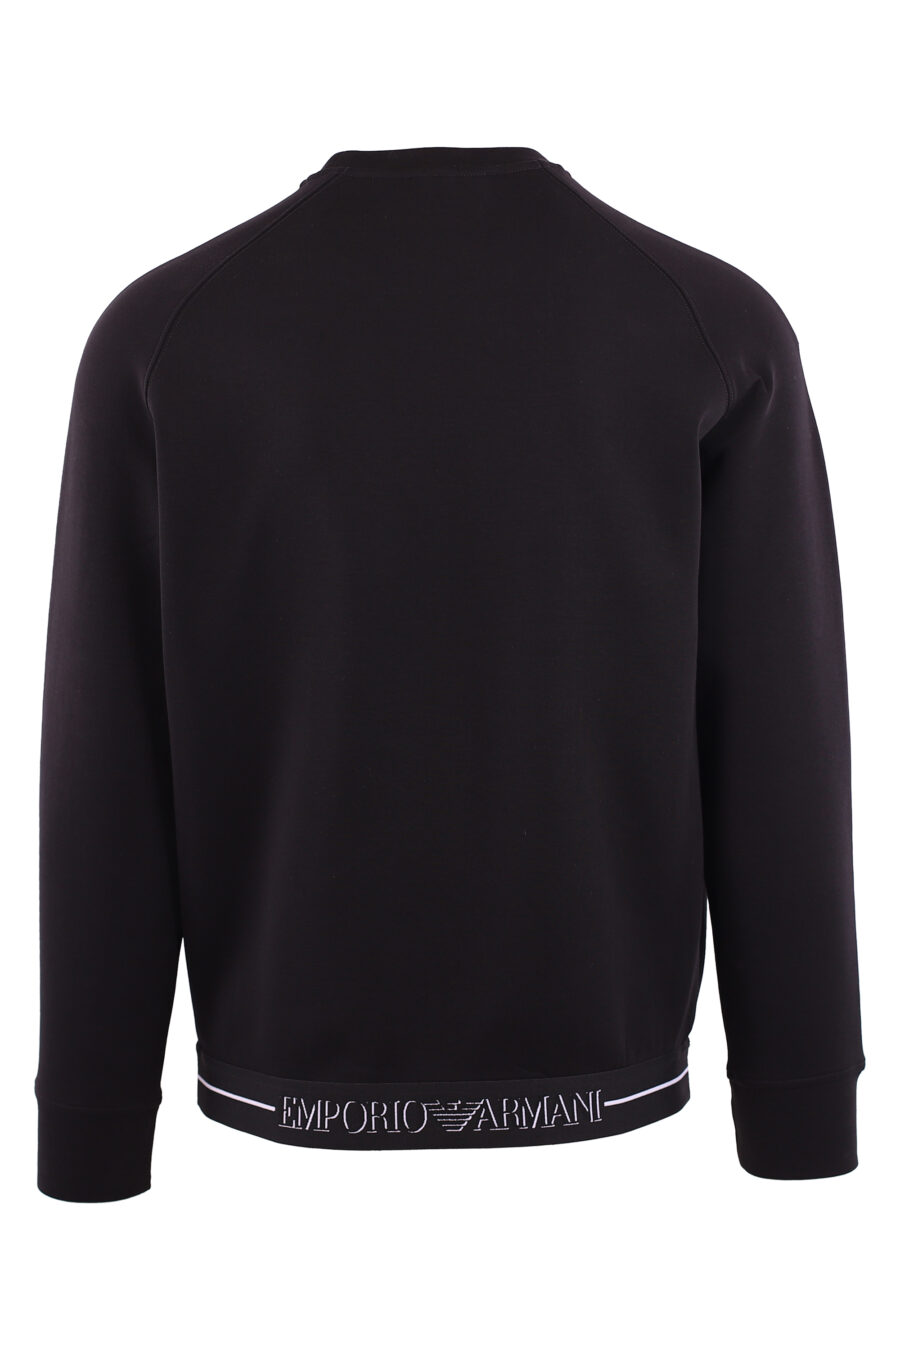 Black sweatshirt with ribbon logo - IMG 2817